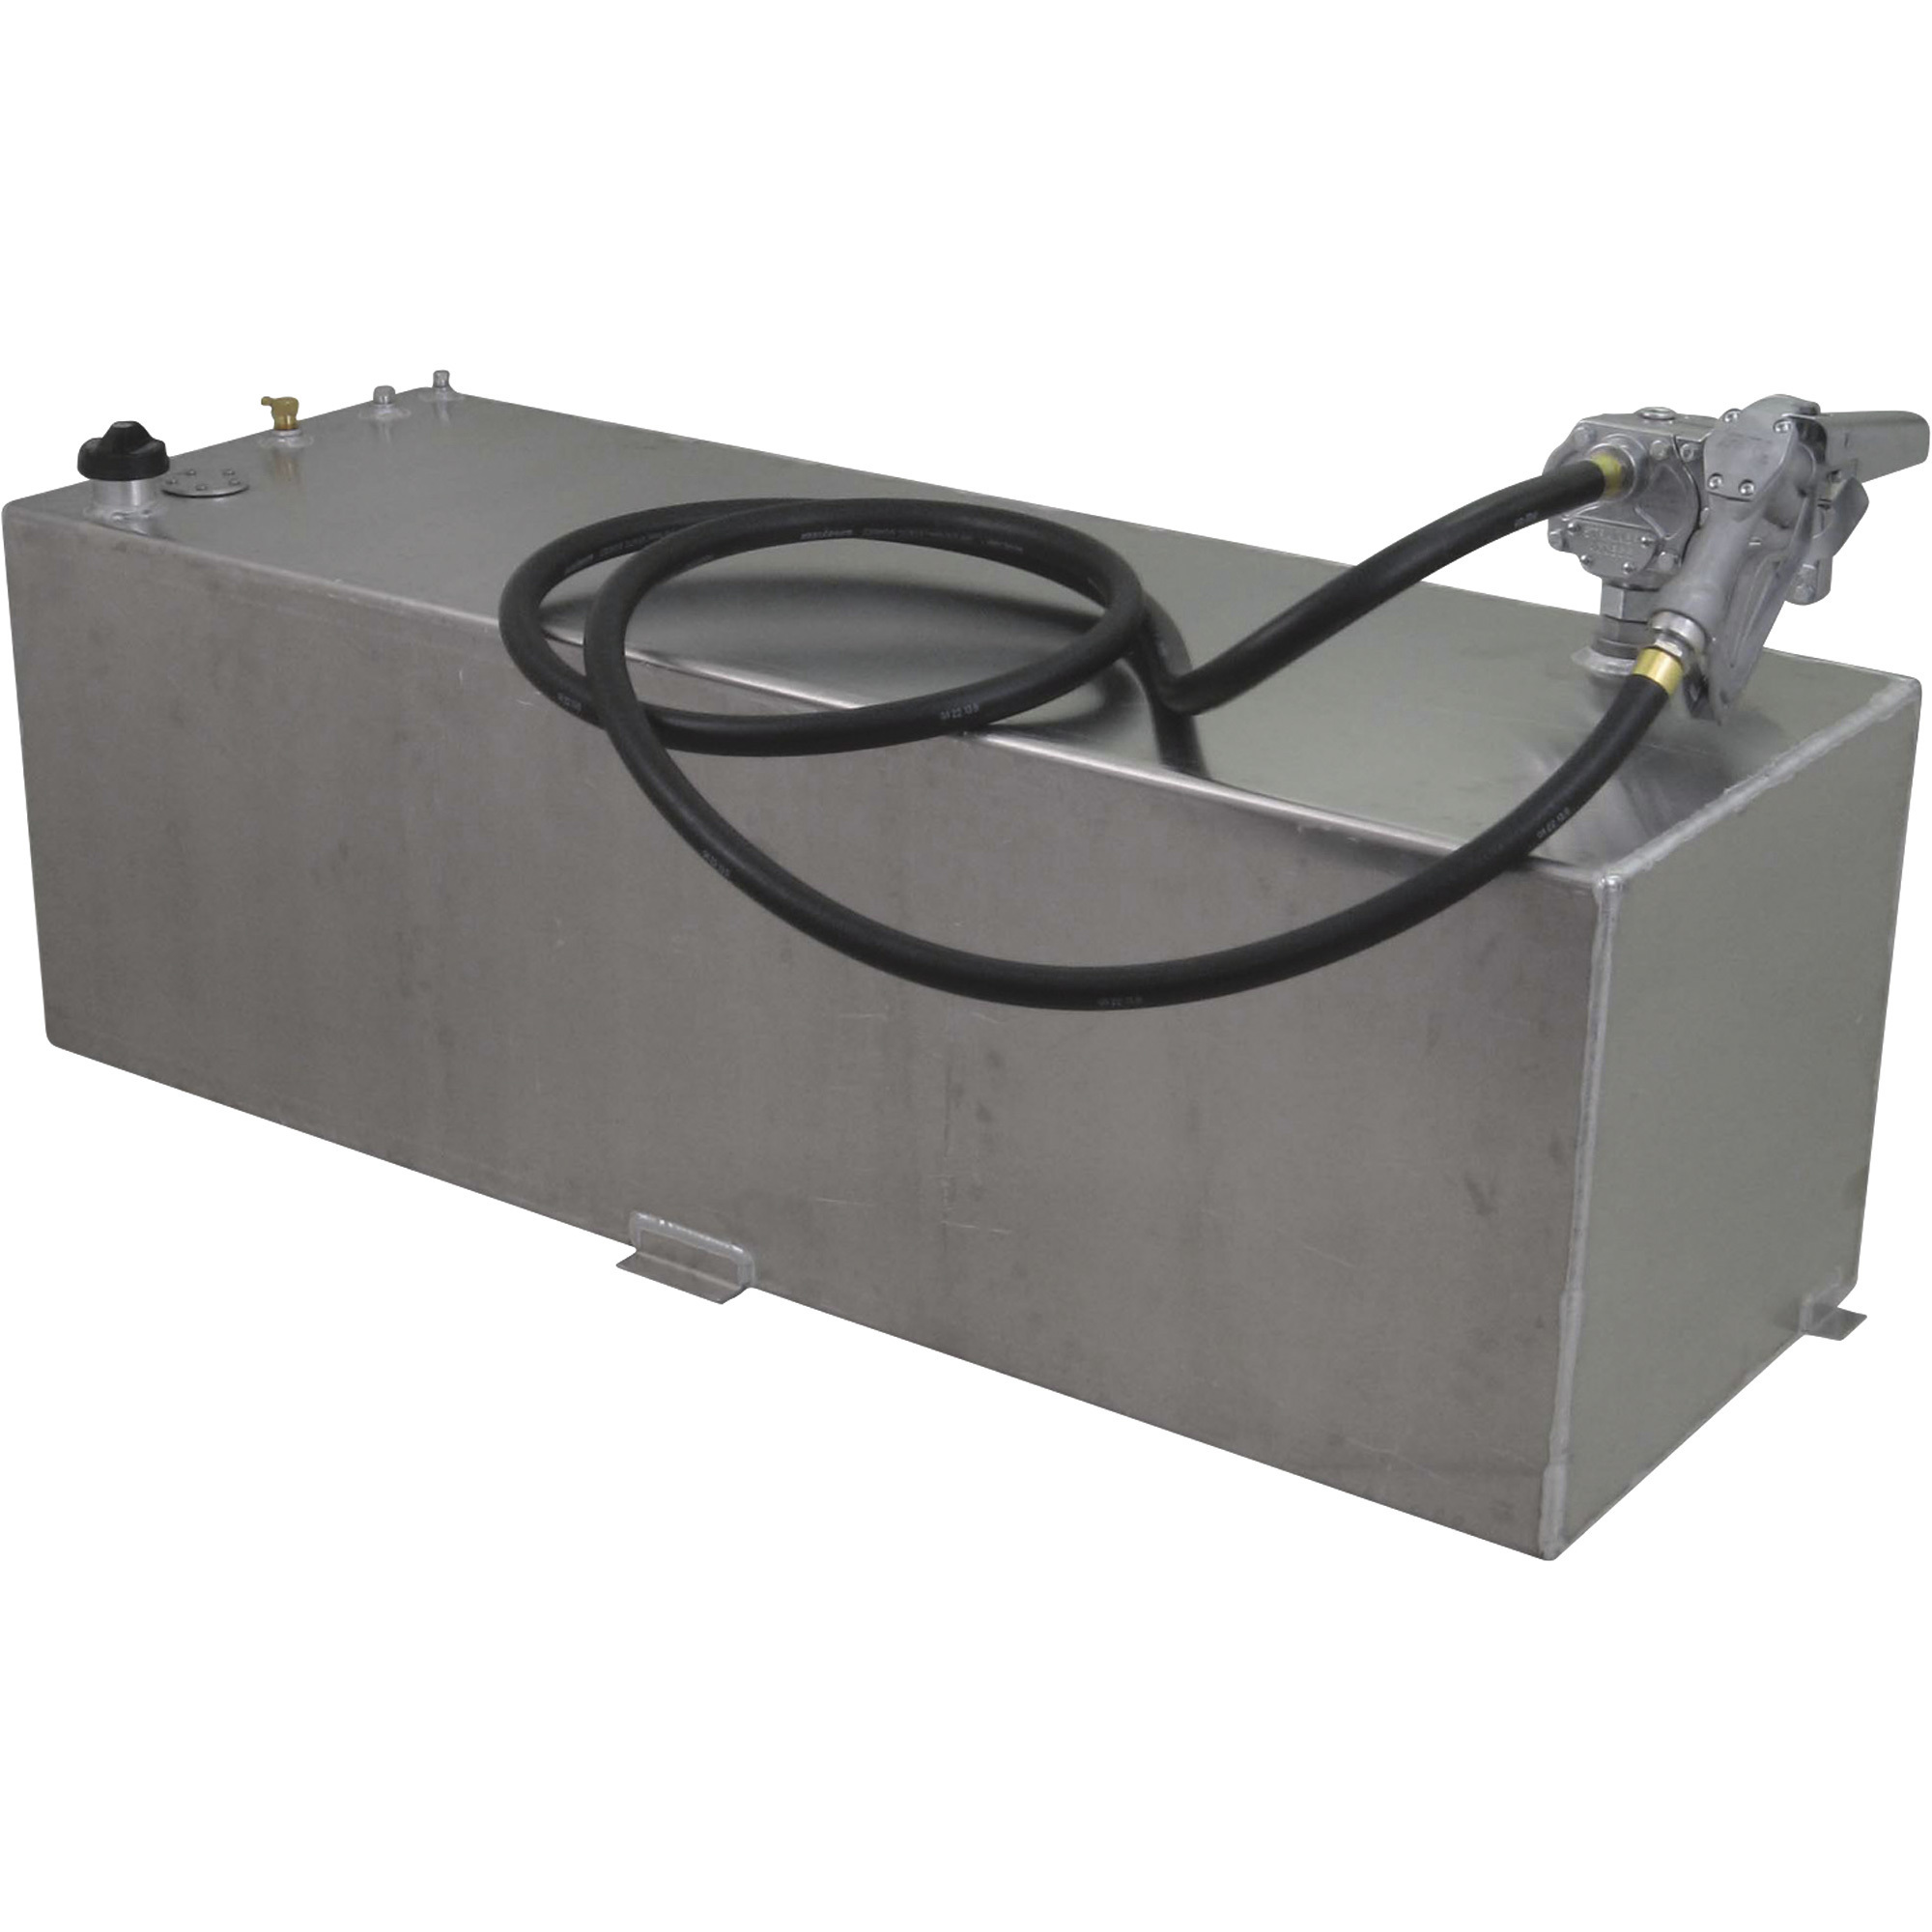 RDS Aluminum Transfer Fuel Tank with GPI 12V Fuel Transfer Pump, 80-Gallon,  Rectangular, Smooth 15 GPM, Model# 73961